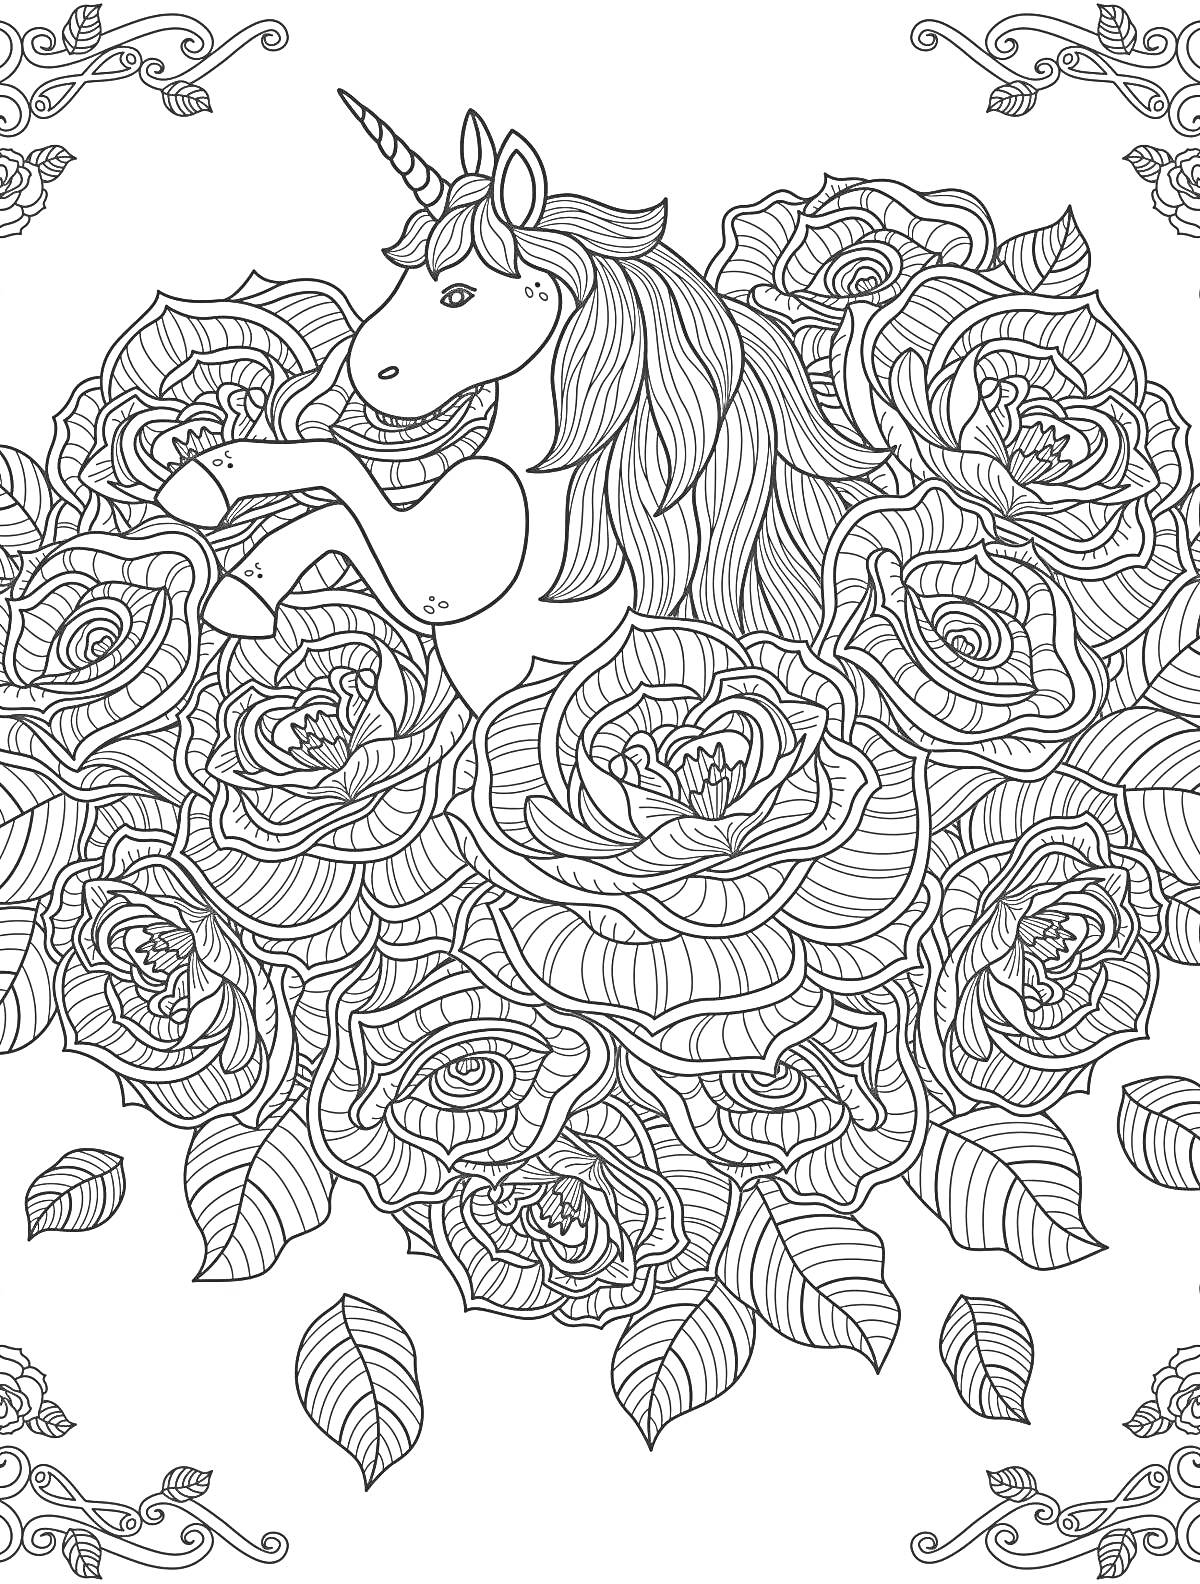 Раскраска Единорог среди роз